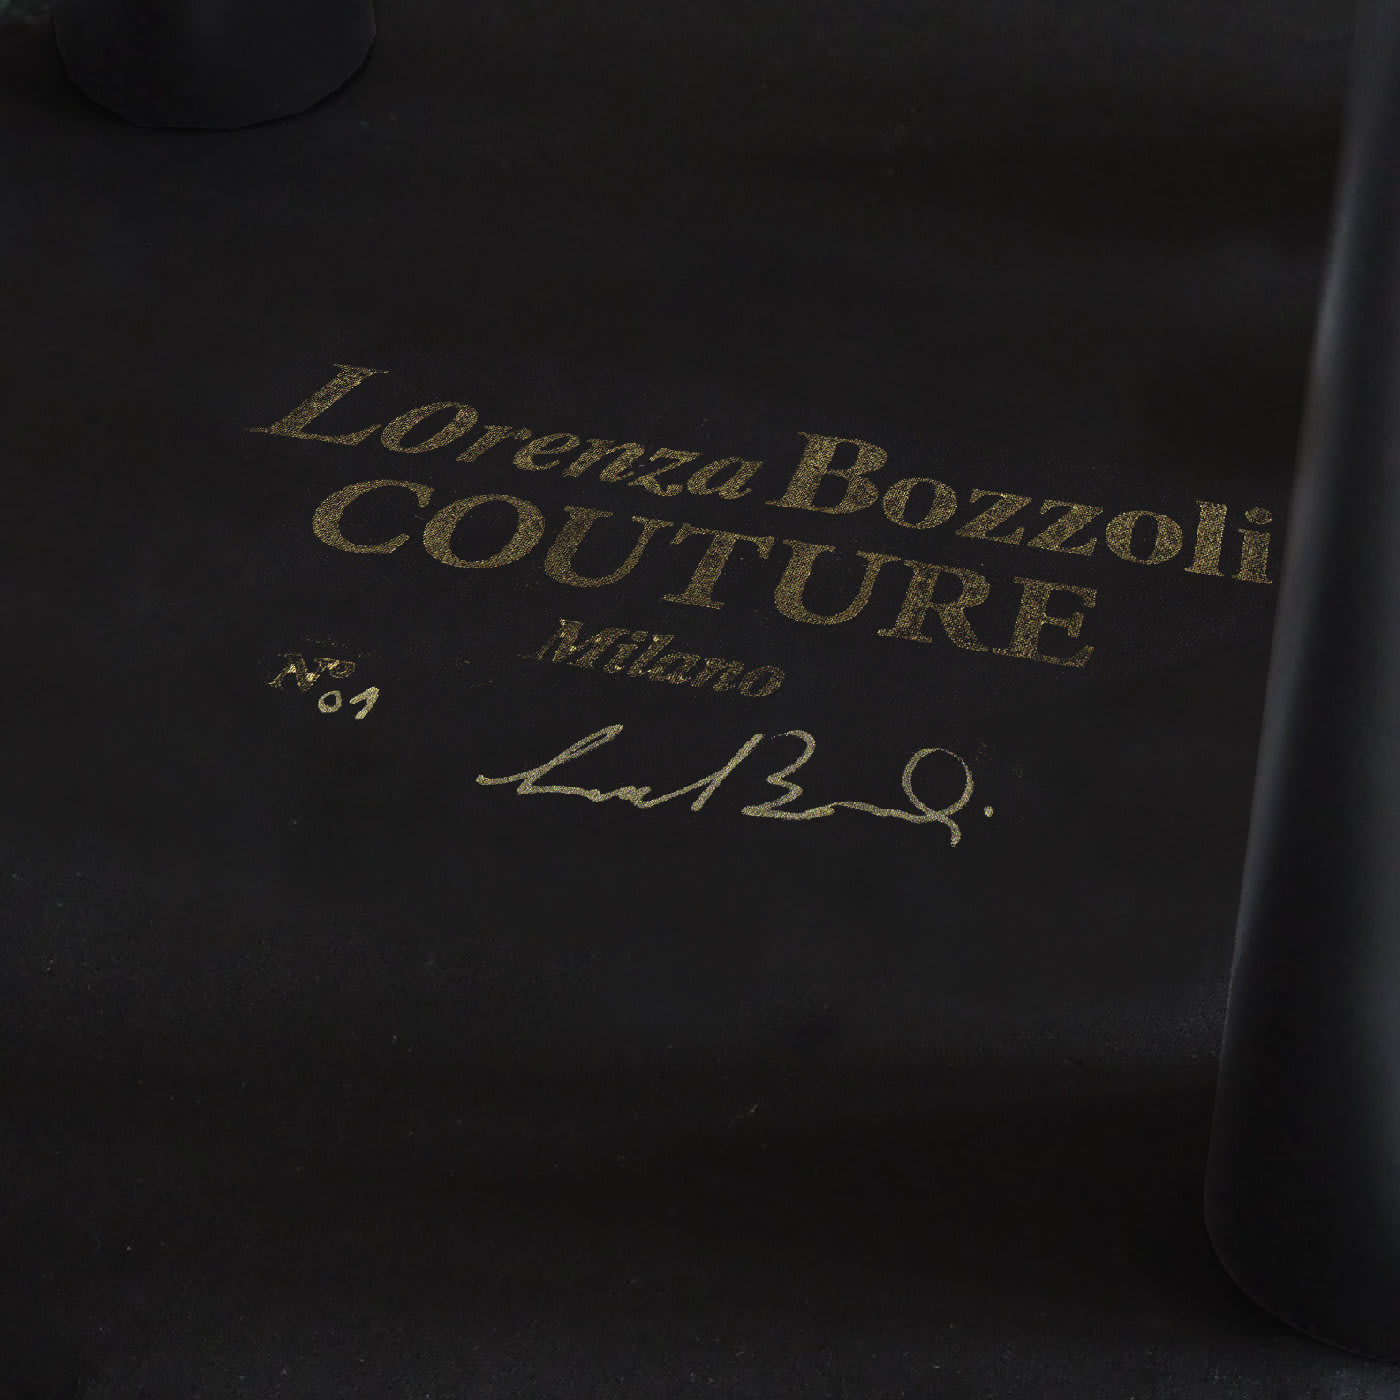 Lorenza Bozzoli Design - Designer - Shop at Artemest